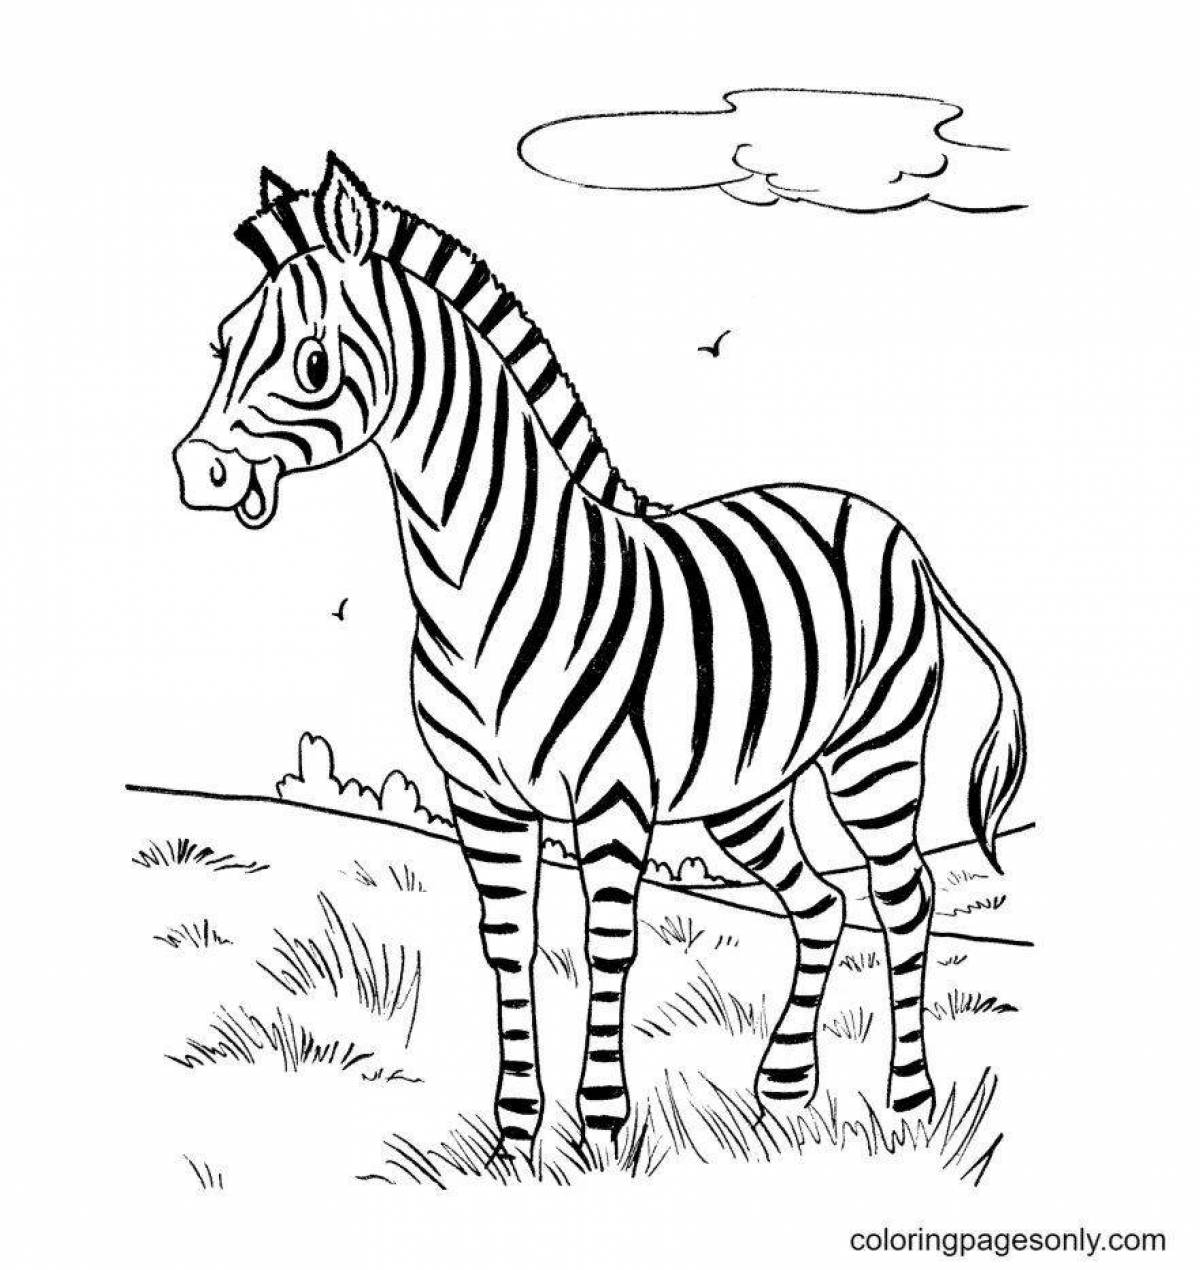 Буйный рисунок зебры